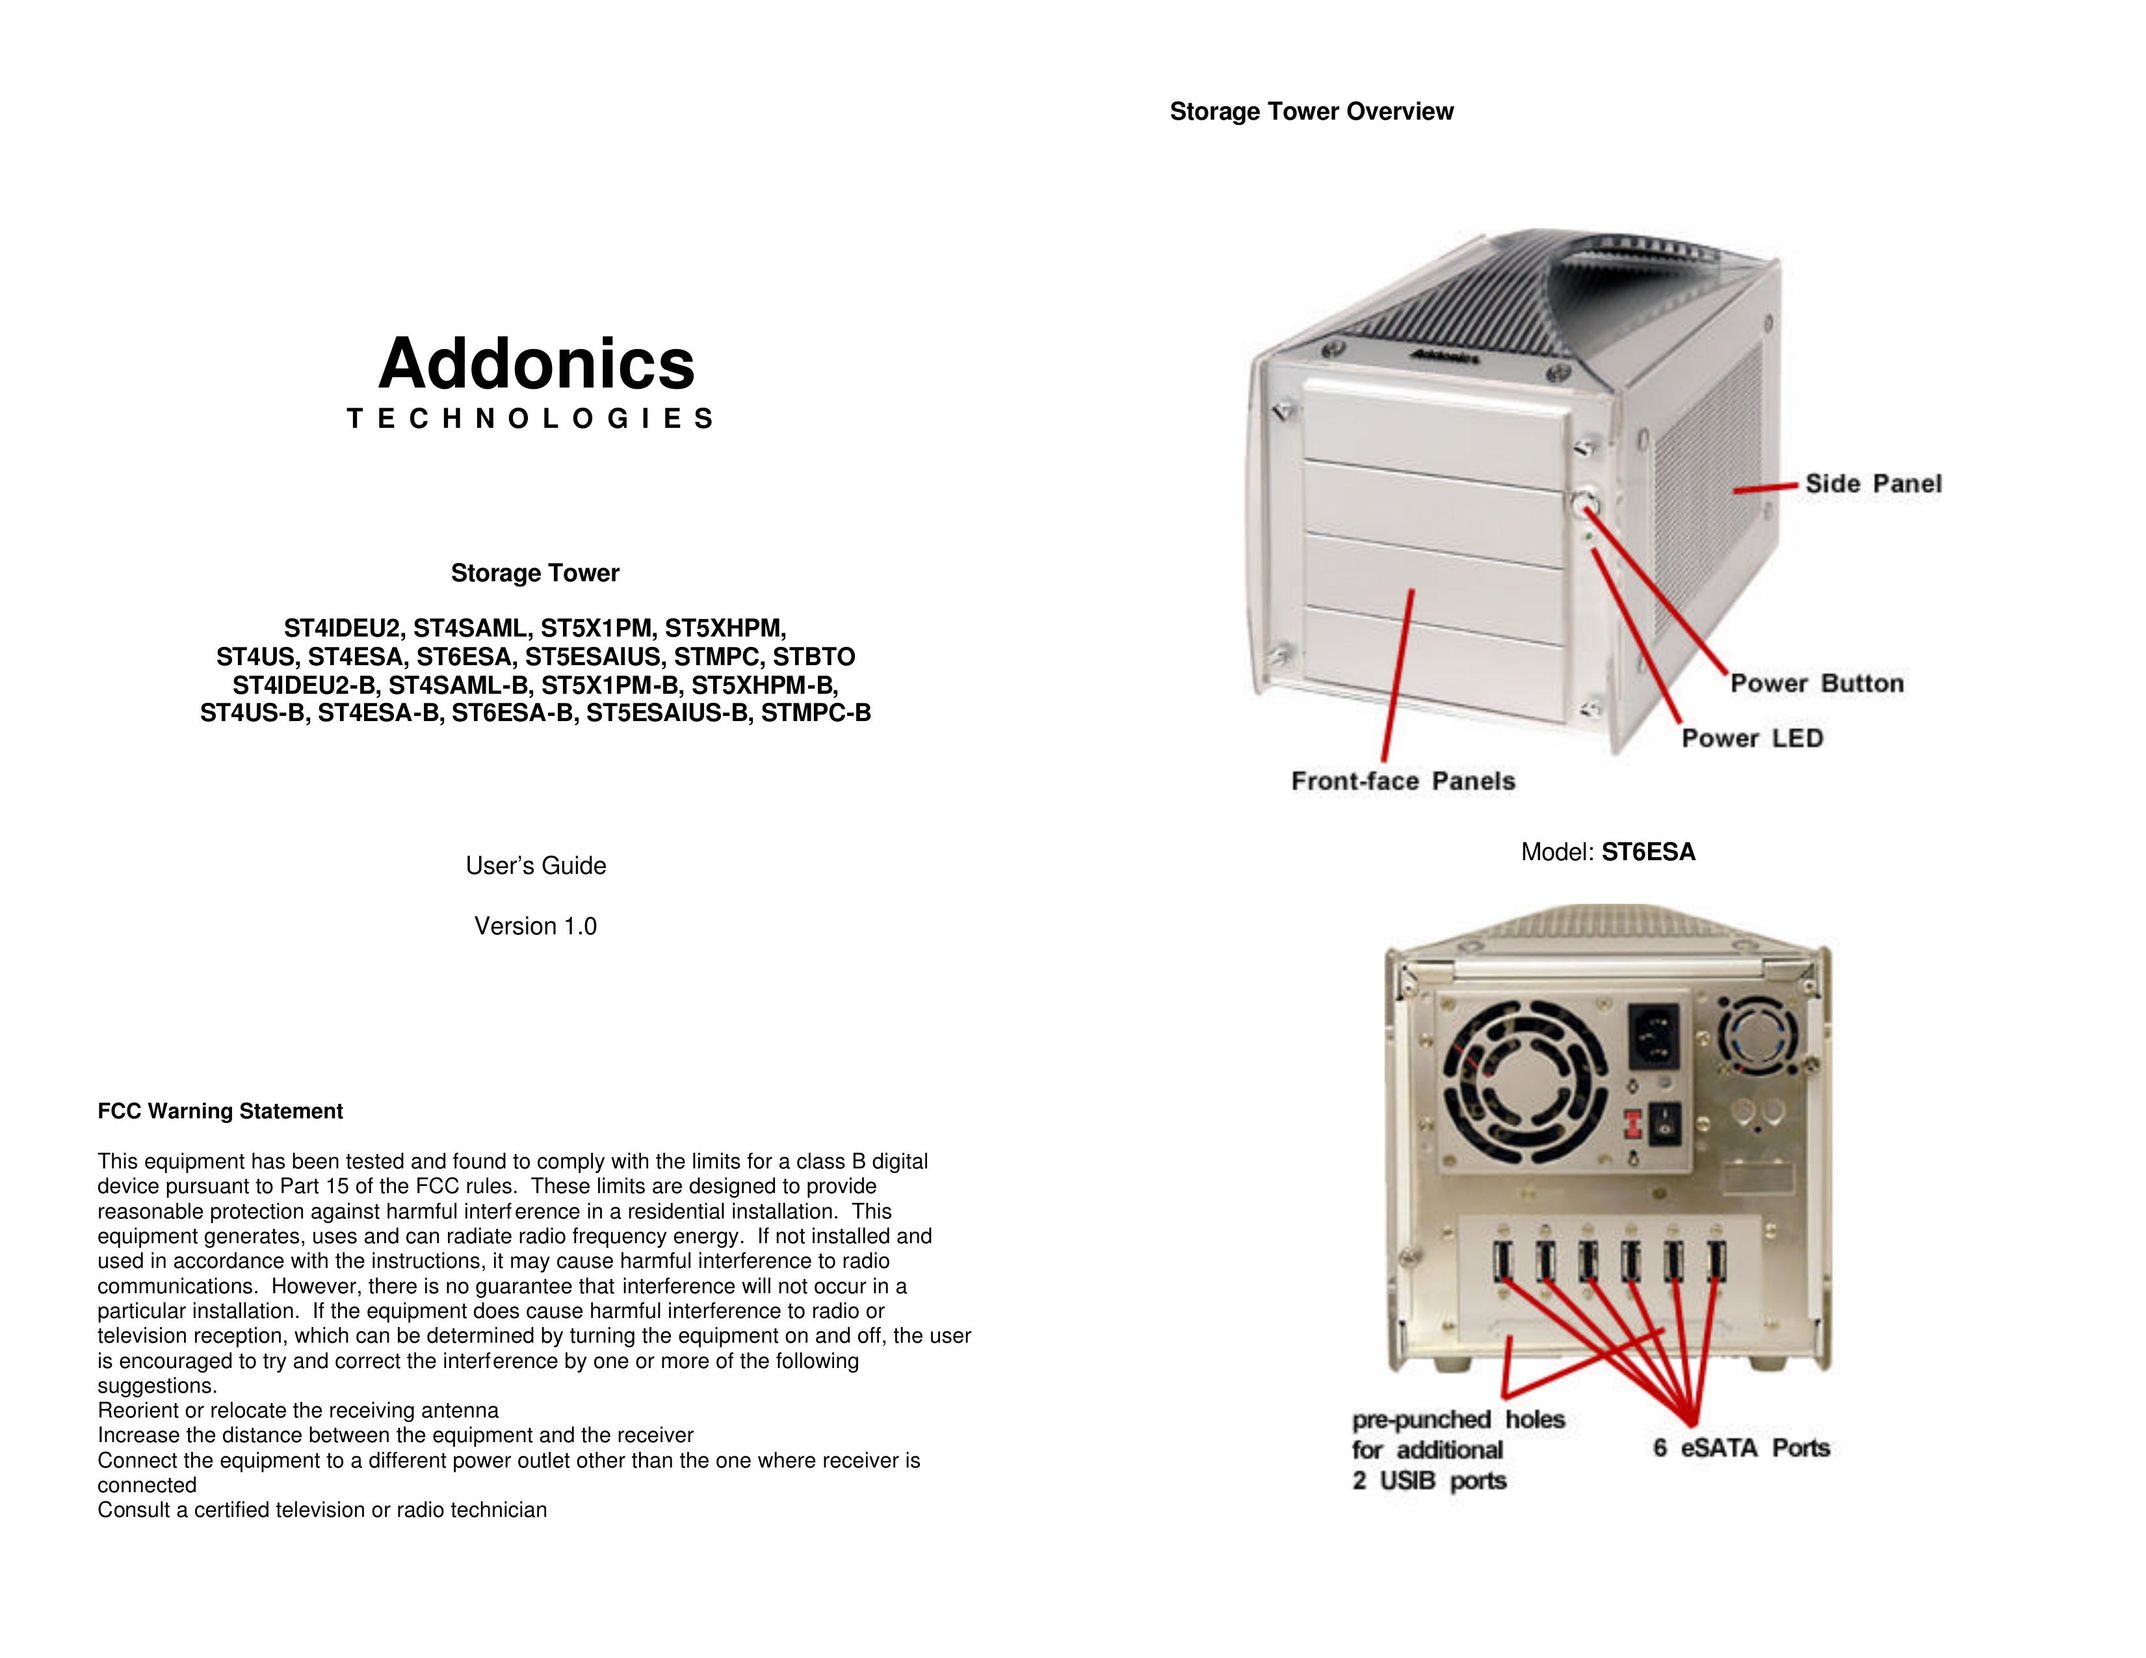 Addonics Technologies ST4SAML Portable Media Storage User Manual